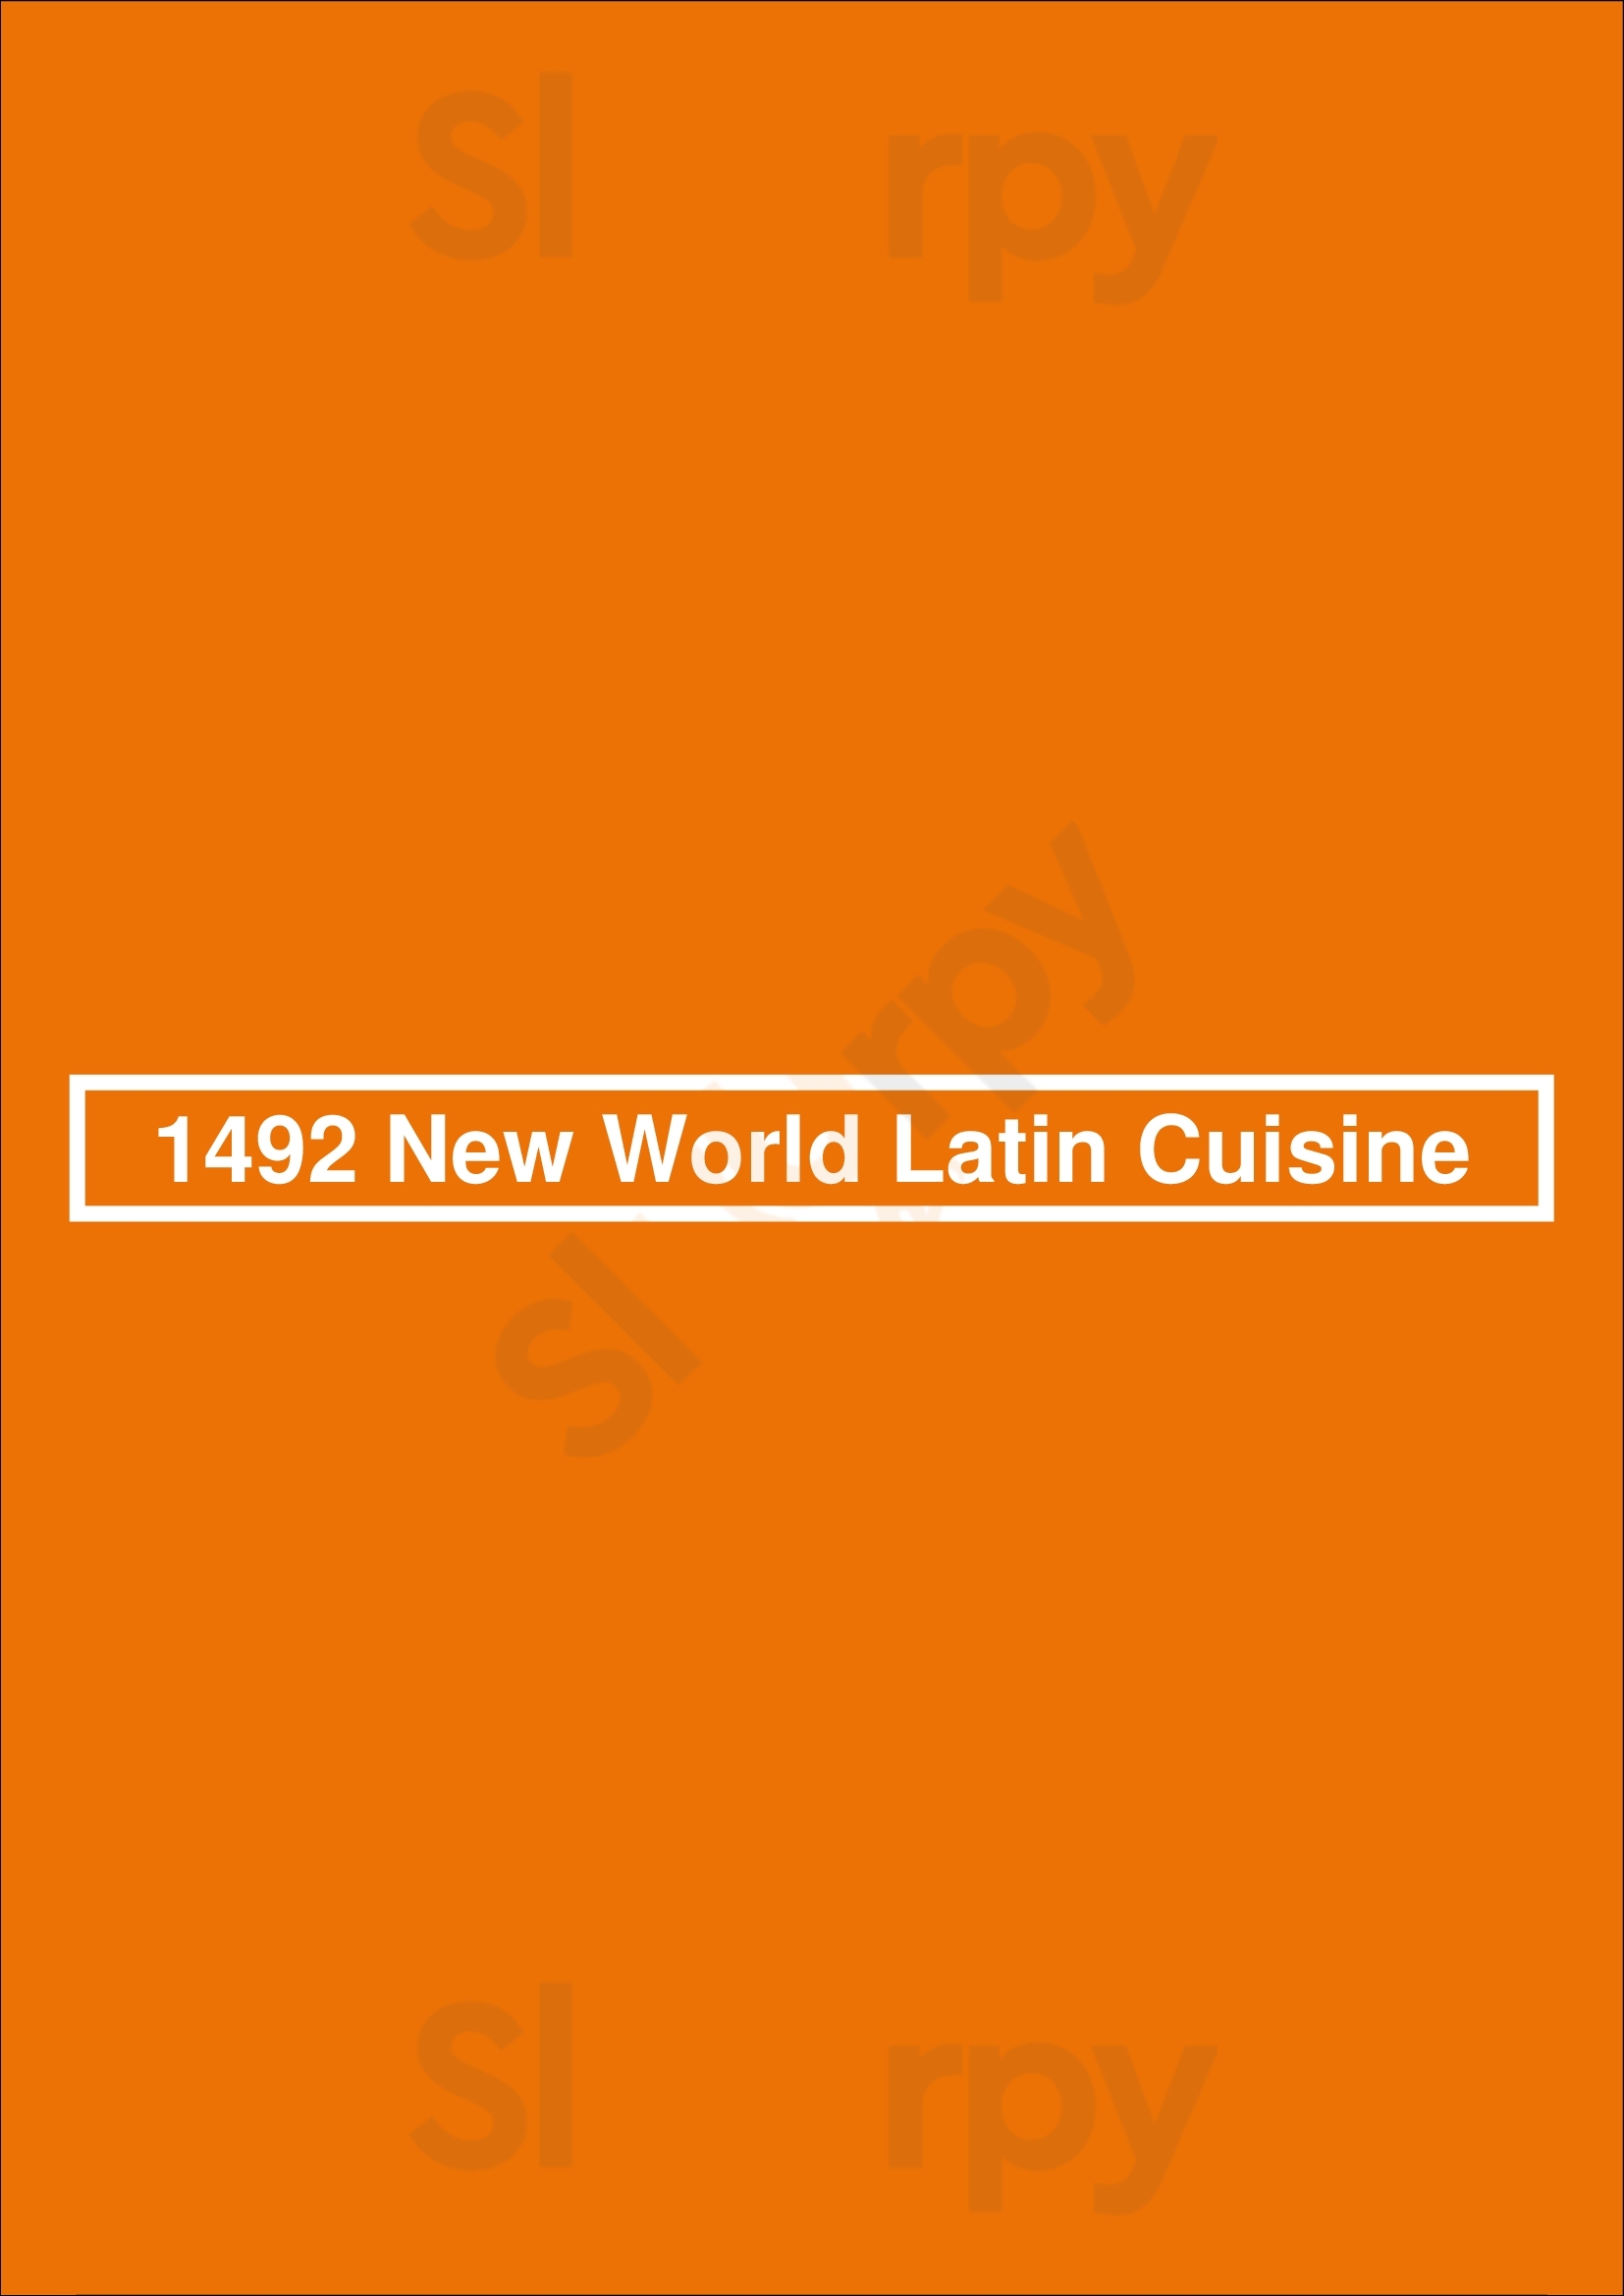 1492 New World Latin Cuisine Oklahoma City Menu - 1